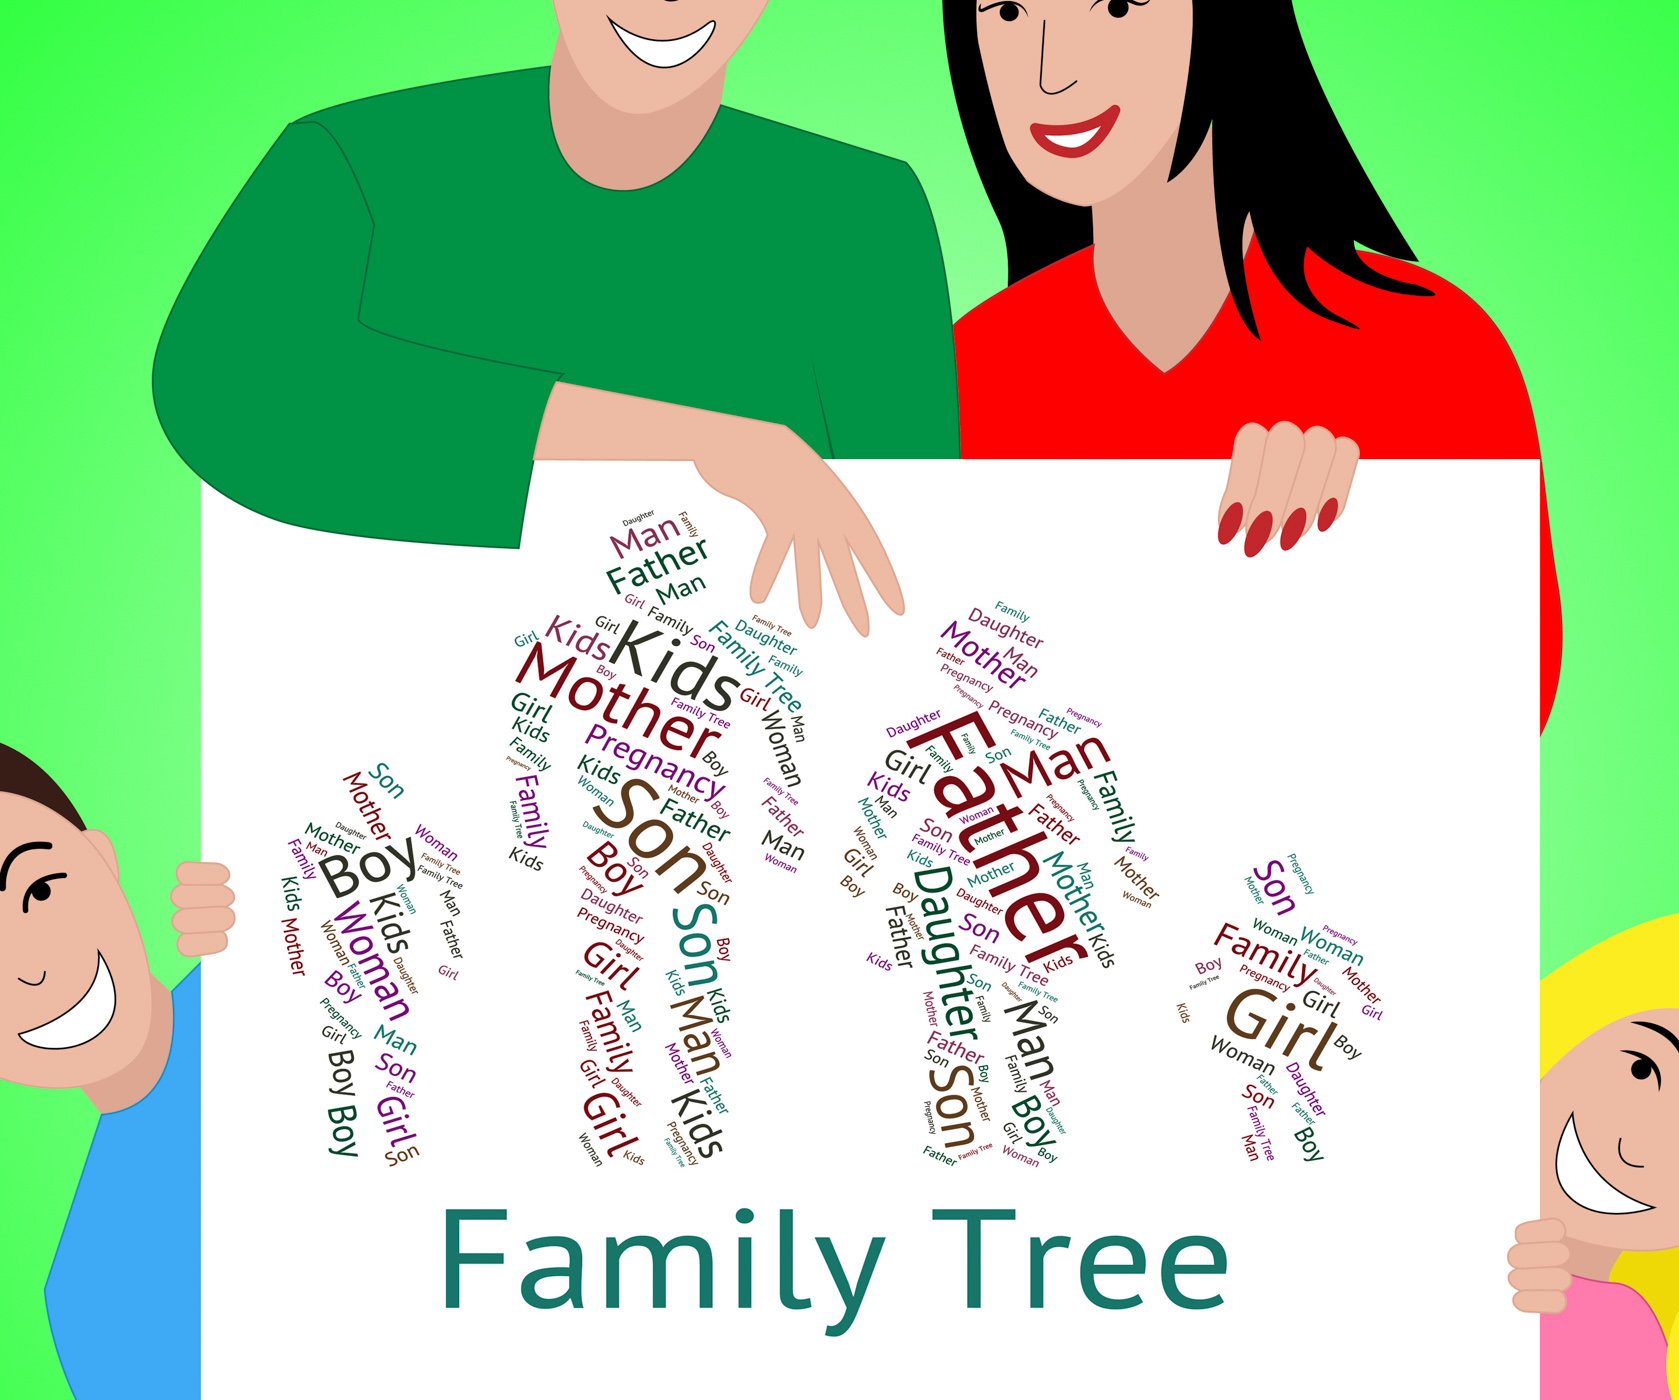 Family tree indicates hereditary ancestry and text photo